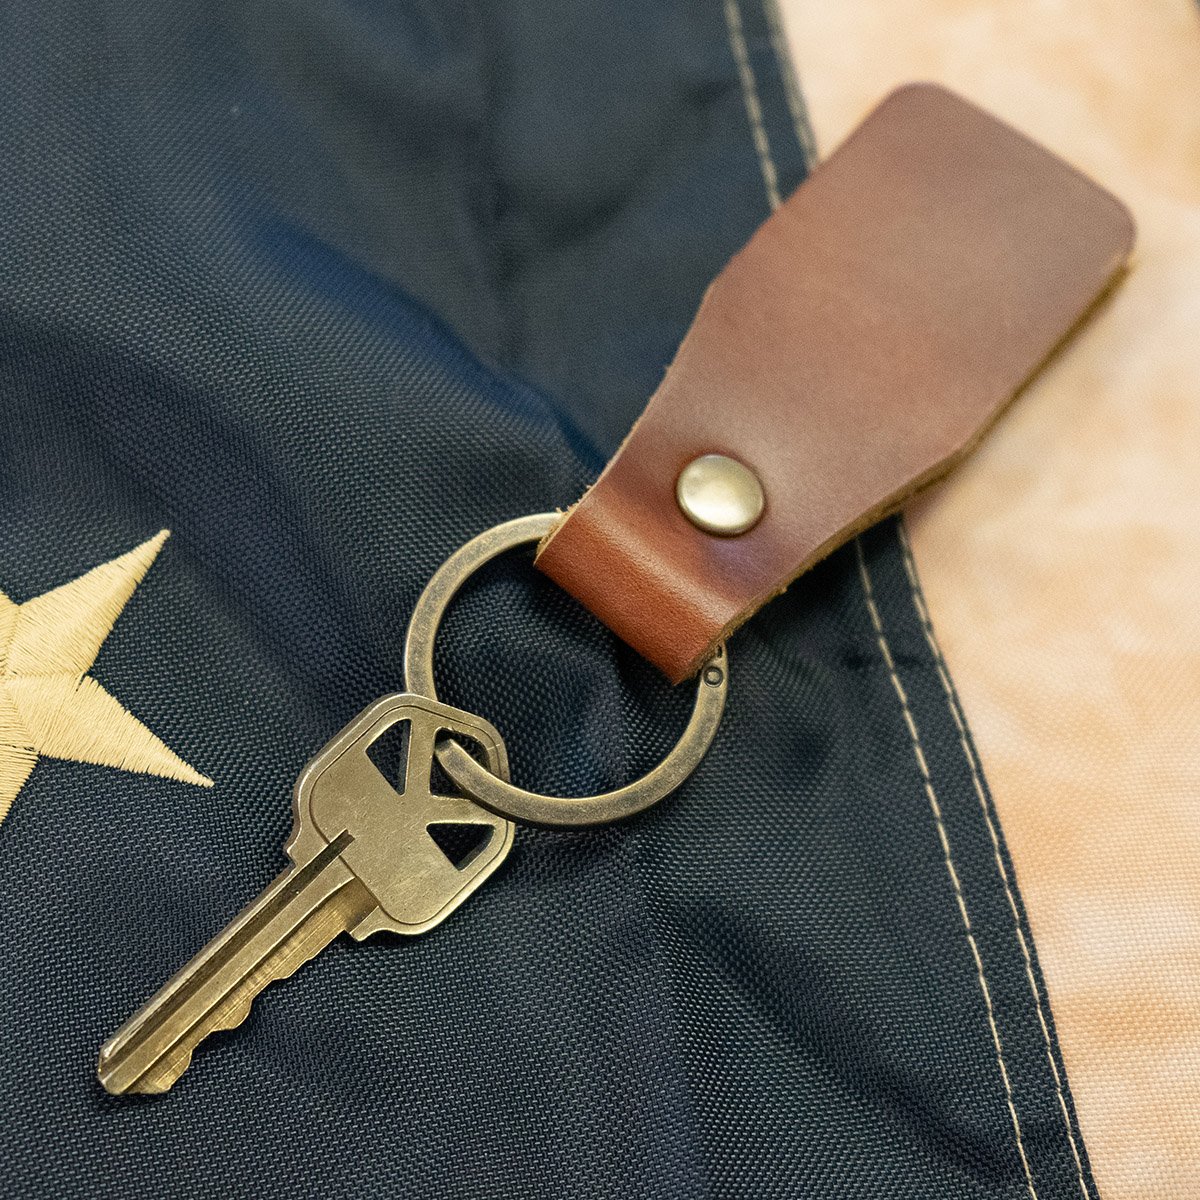 Rustico Loop Leather Keychain in Buckskin AC0131-0005